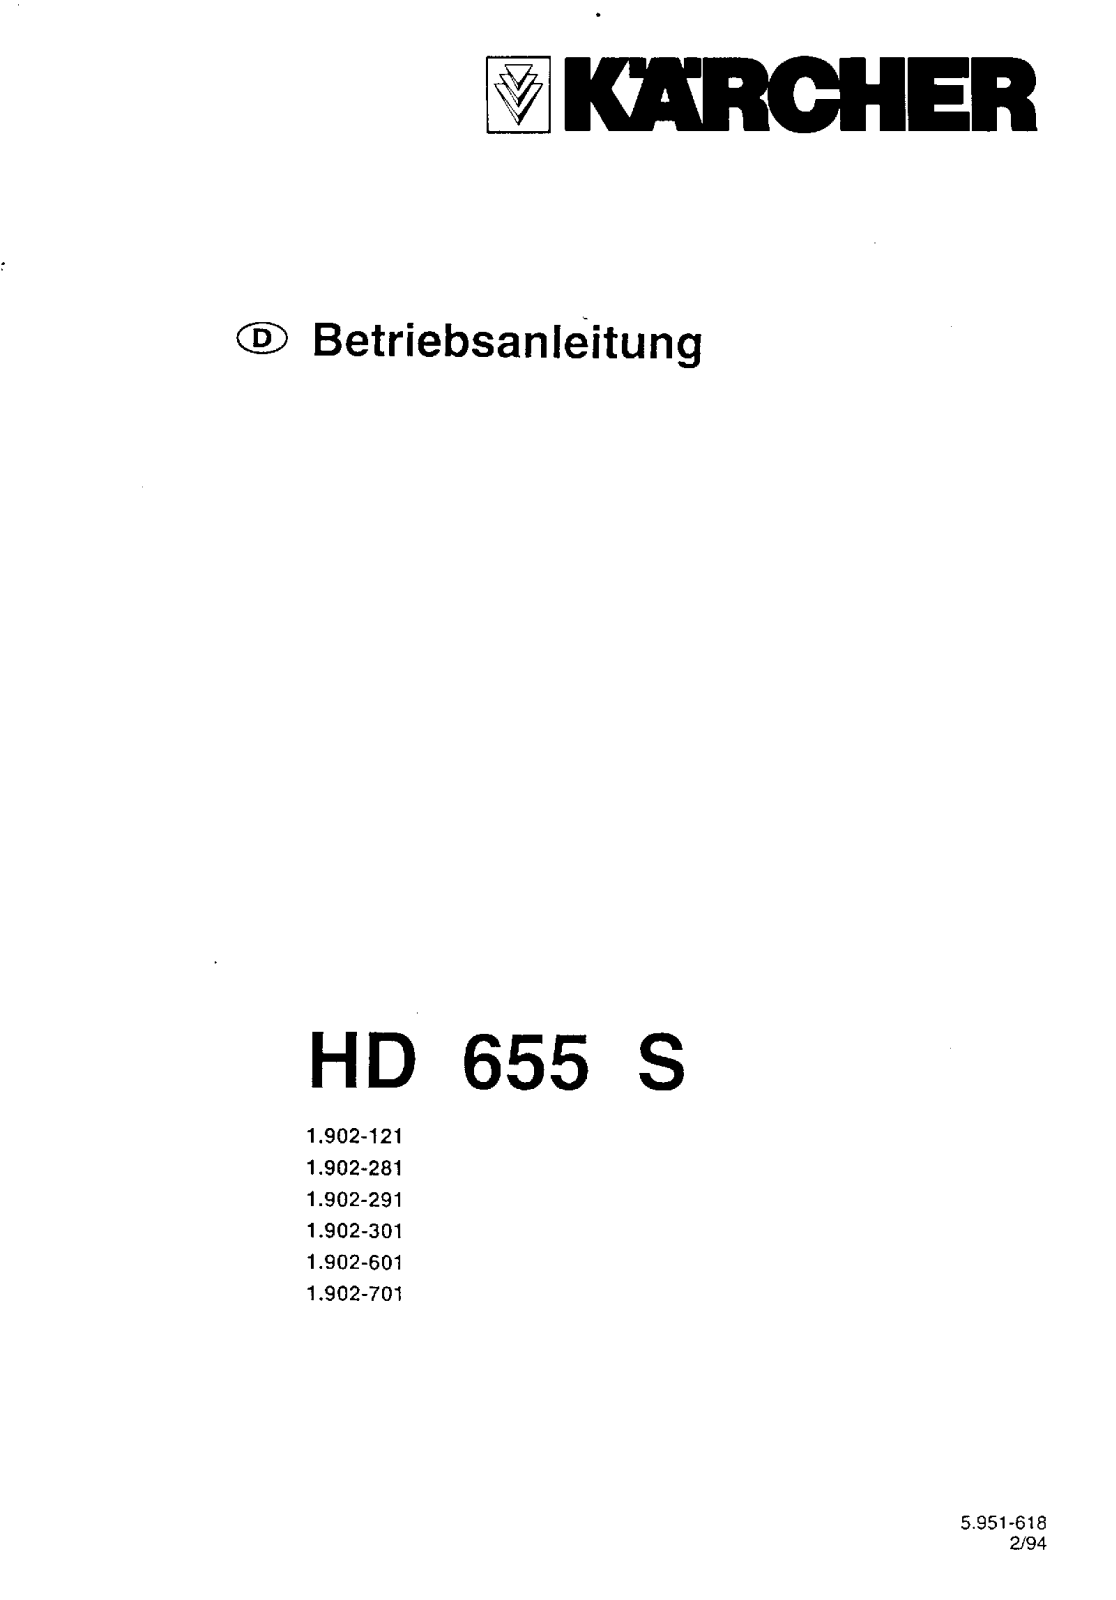 Kärcher HD 655 S User Manual